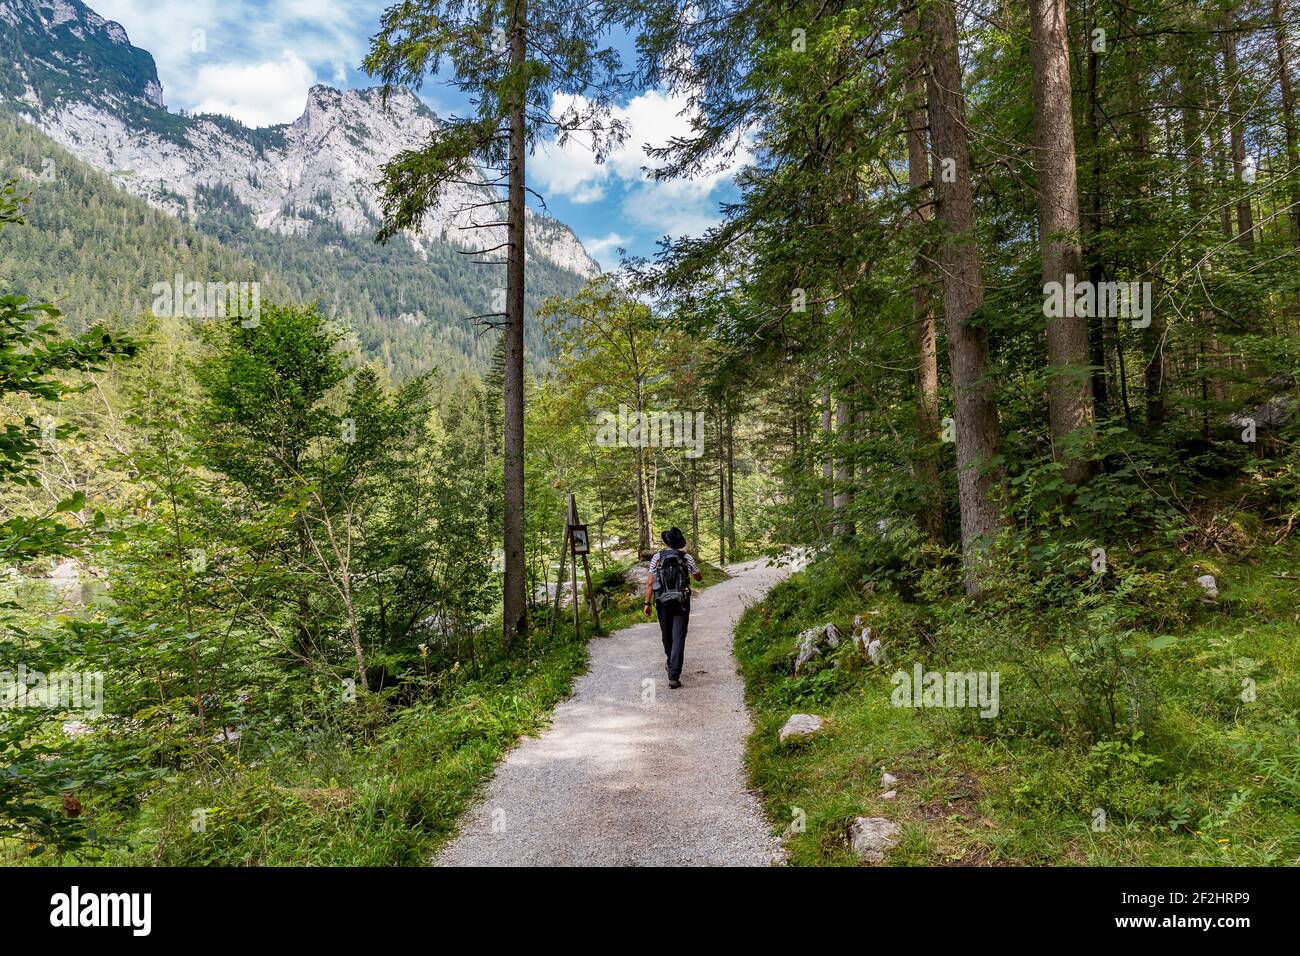 Hikers on the forest path around the Hintersee, Ramsau, Berchtesgaden, Berchtesgaden Alps, Berchtesgaden National Park, Berchtesgadener Land, Upper Bavaria, Bavaria, Germany, Europe Stock Photo